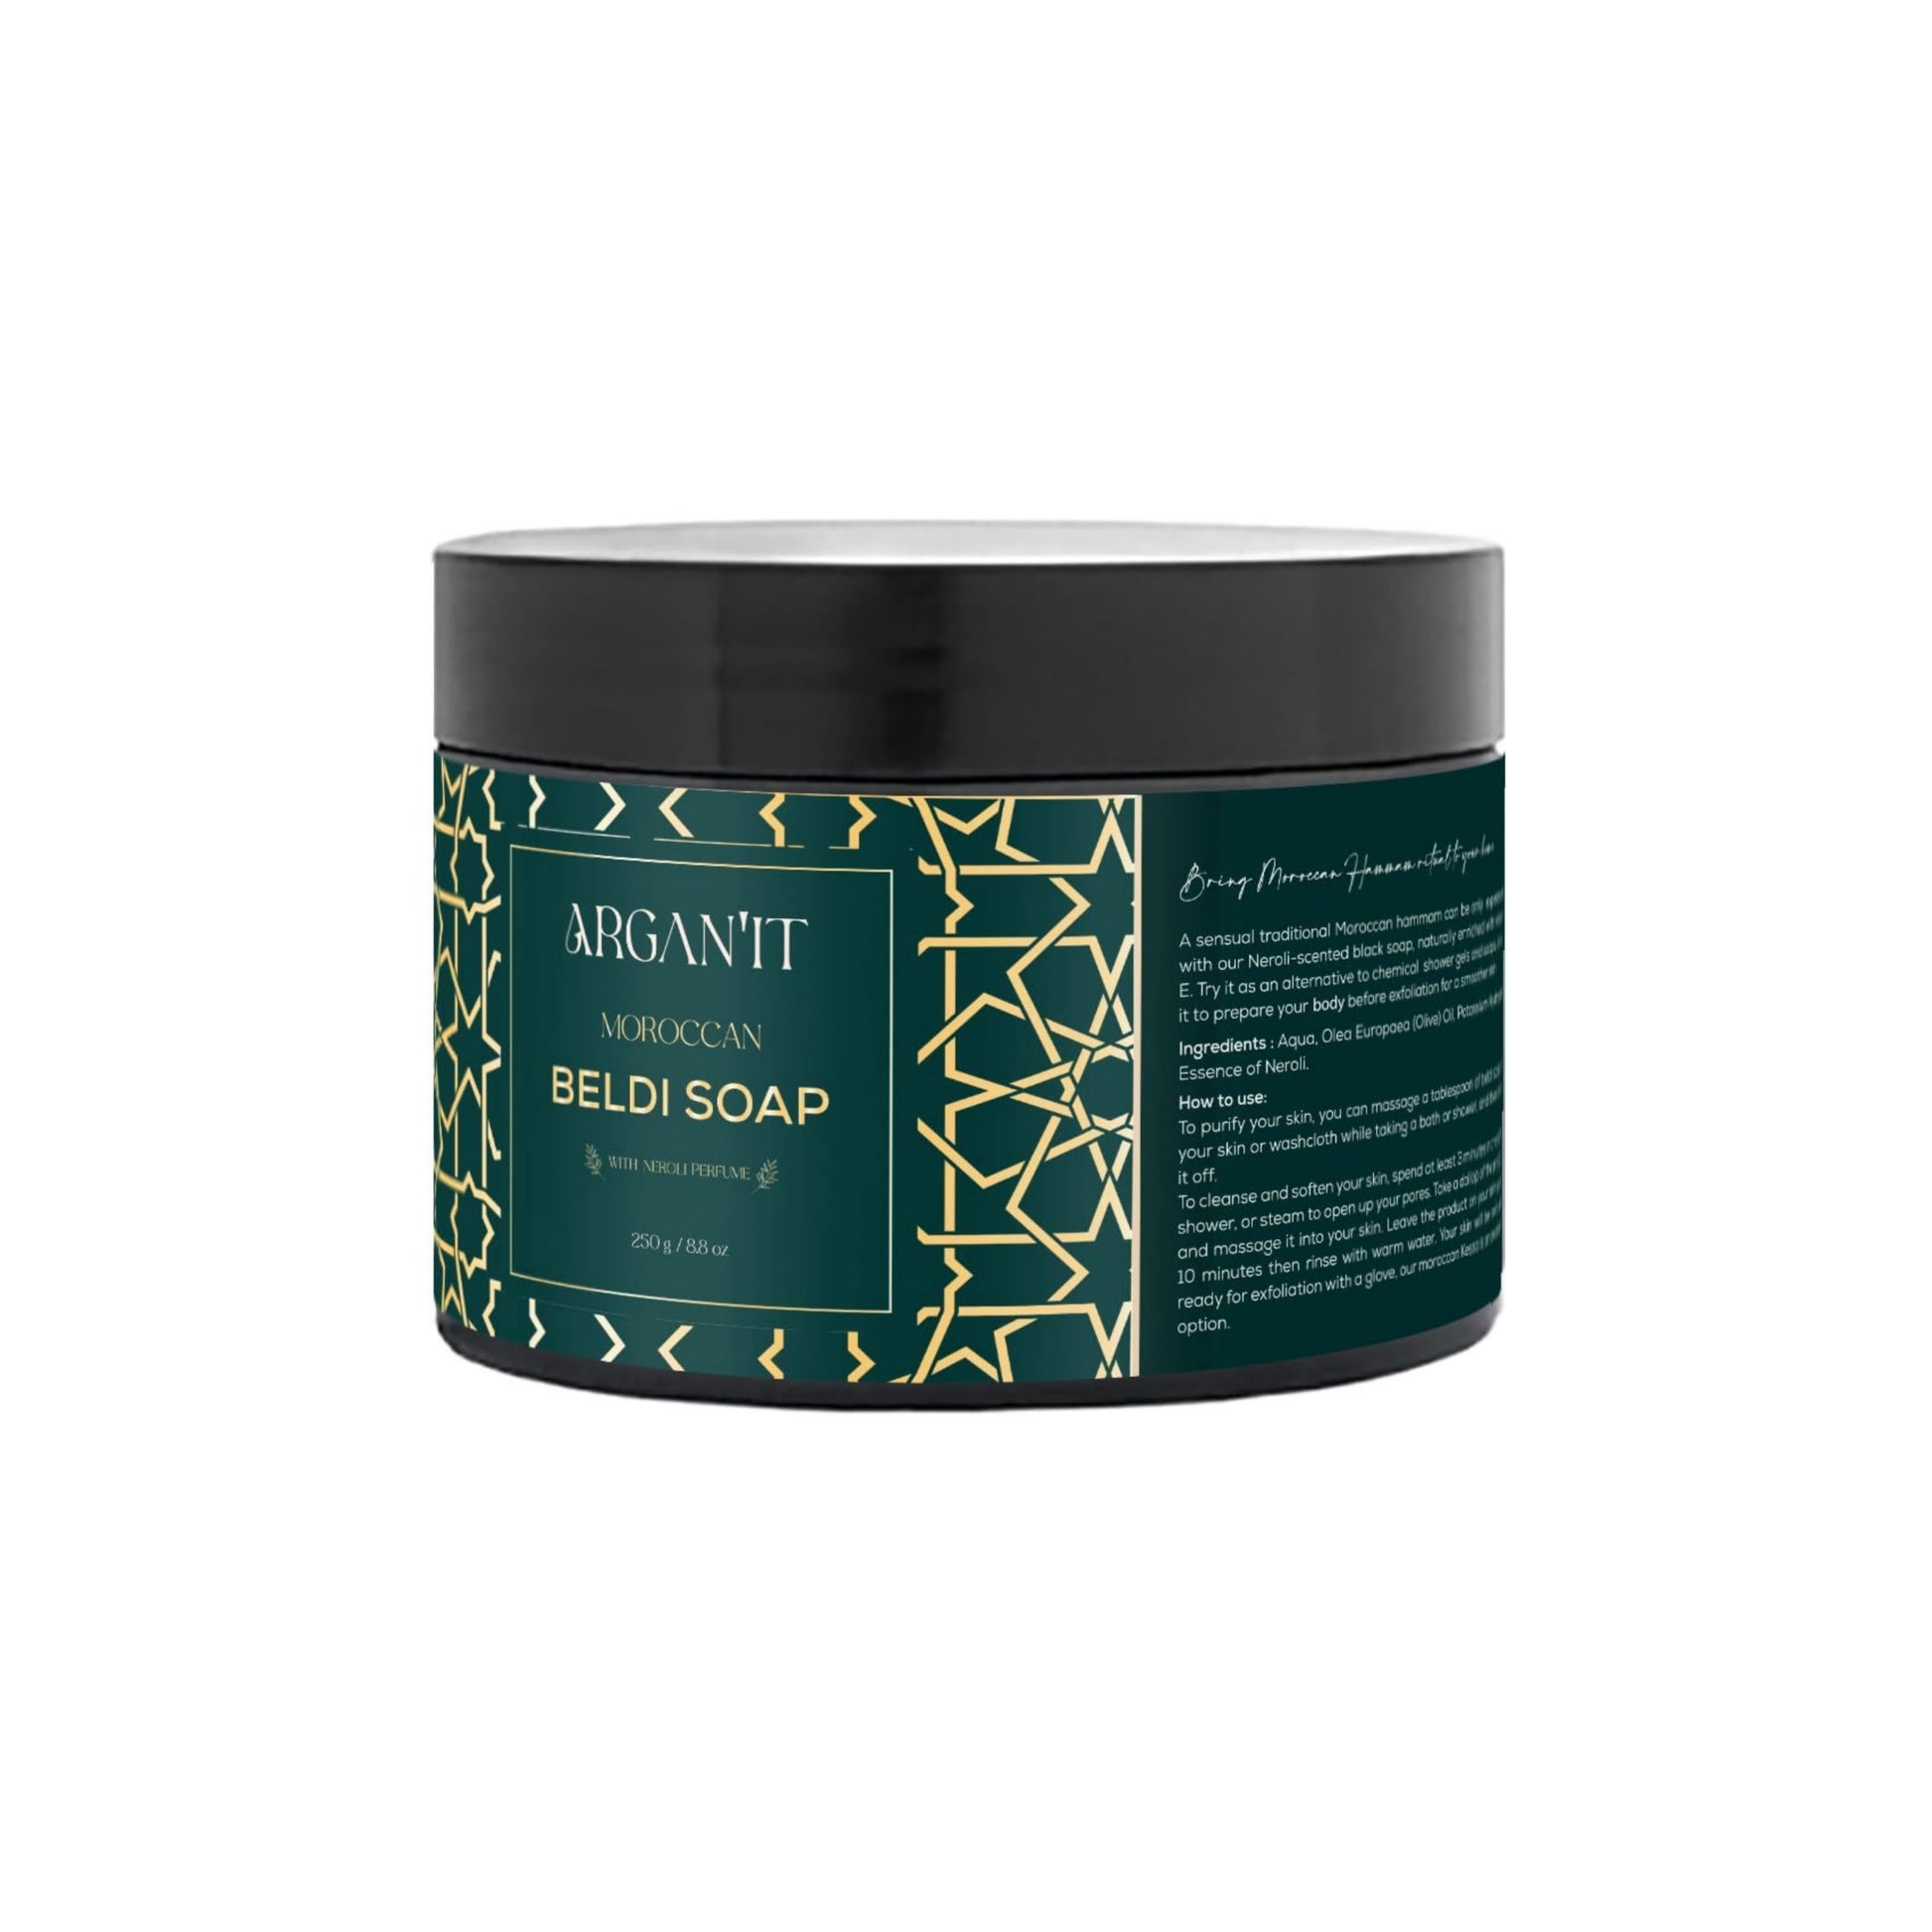 Moroccan Black Soap Skin-Rejuvenating Exfoliation - 100% Natural, Artisan Beldi Soap